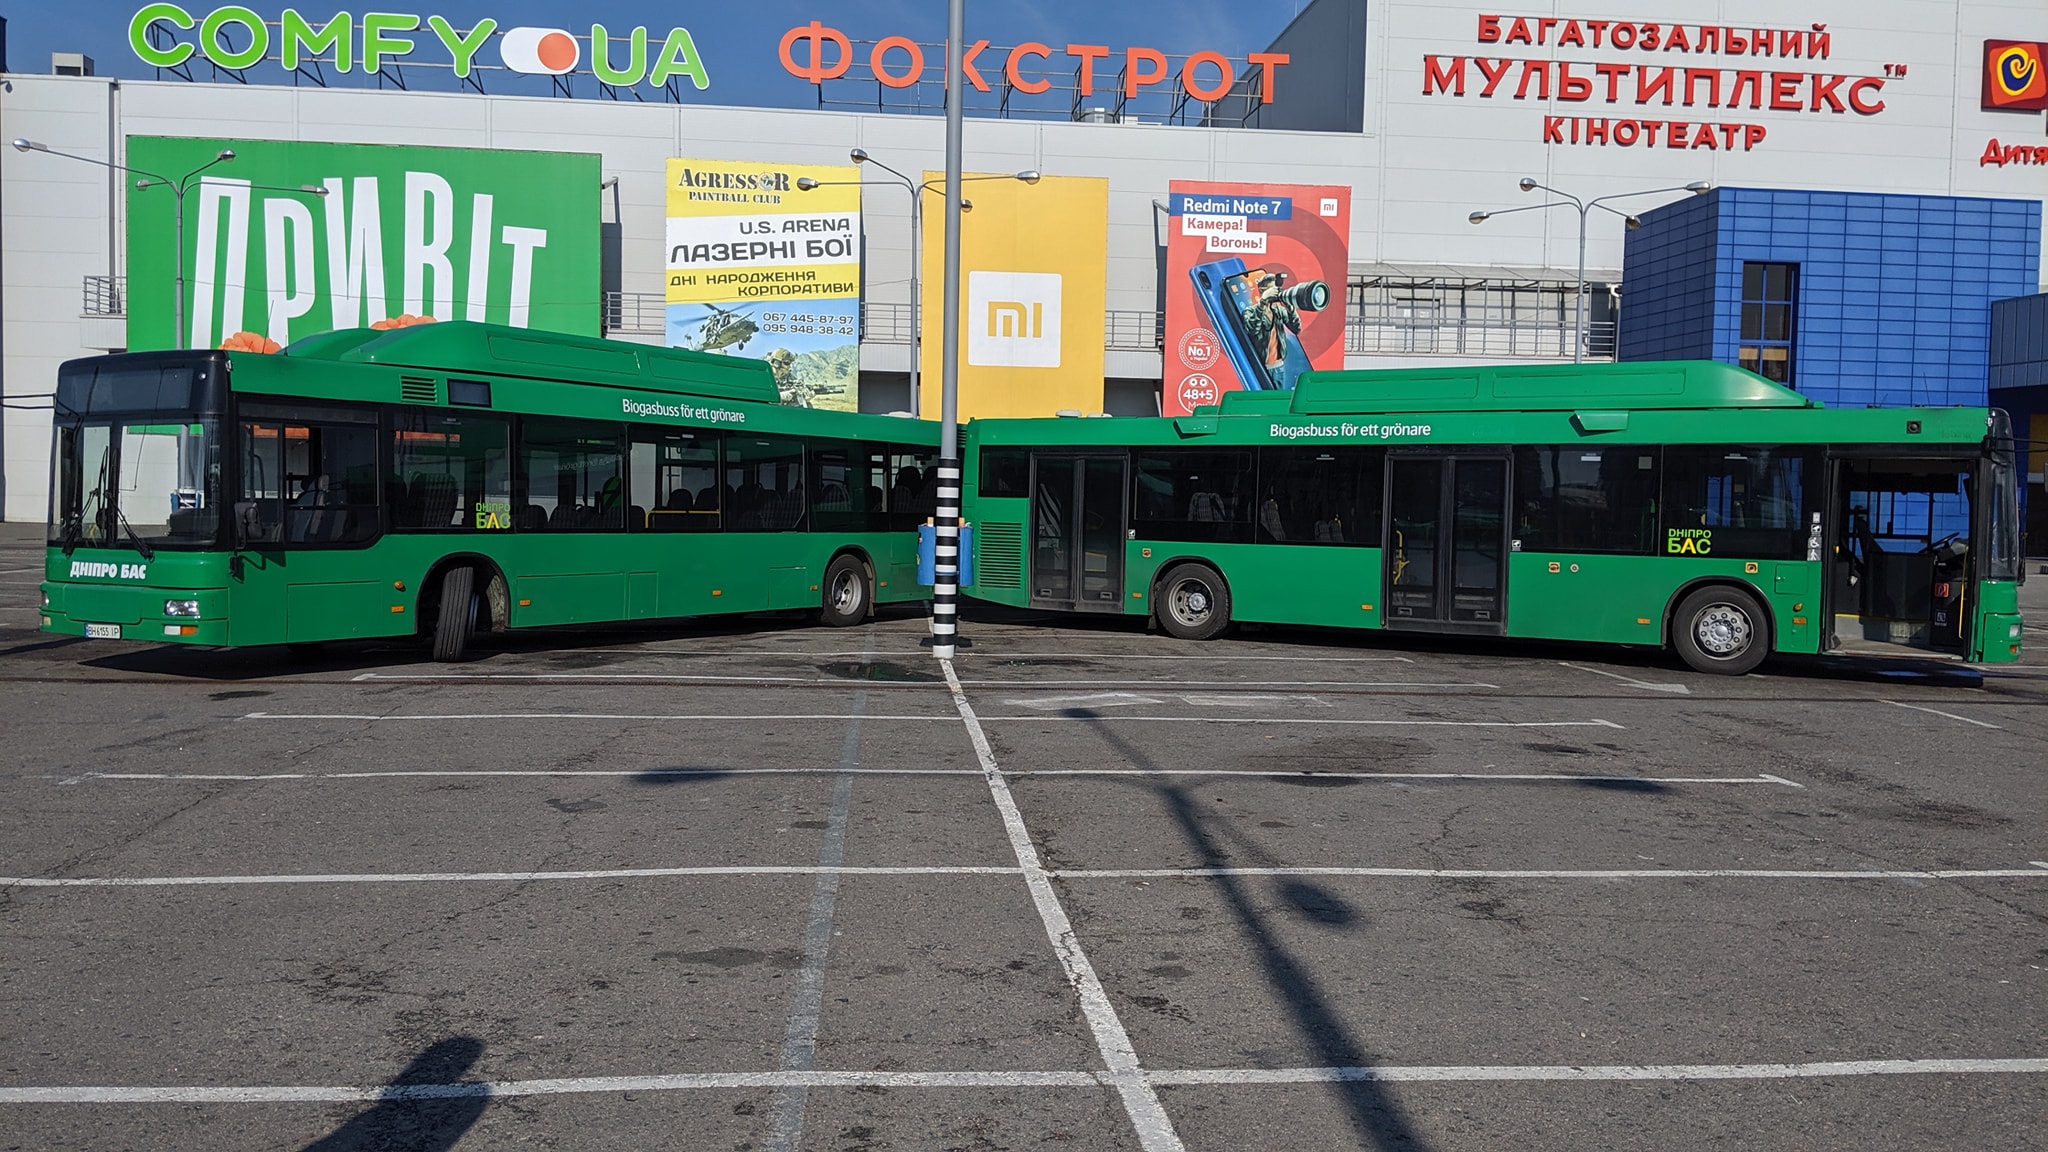 На 4 маршрутах запустят большие автобусы. Новости Днепра